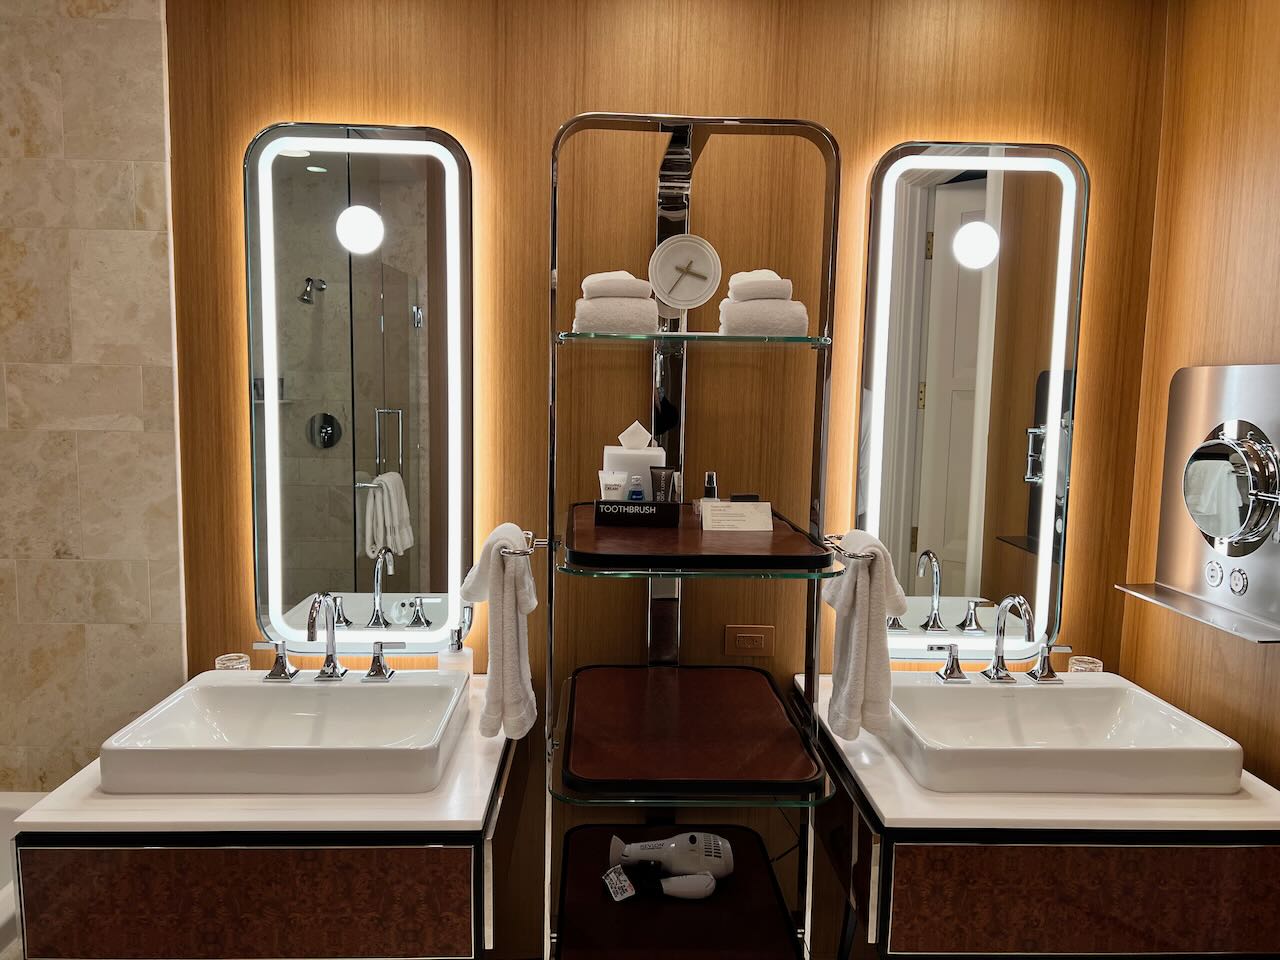 New Wynn Las Vegas Rooms - bathroom sinks